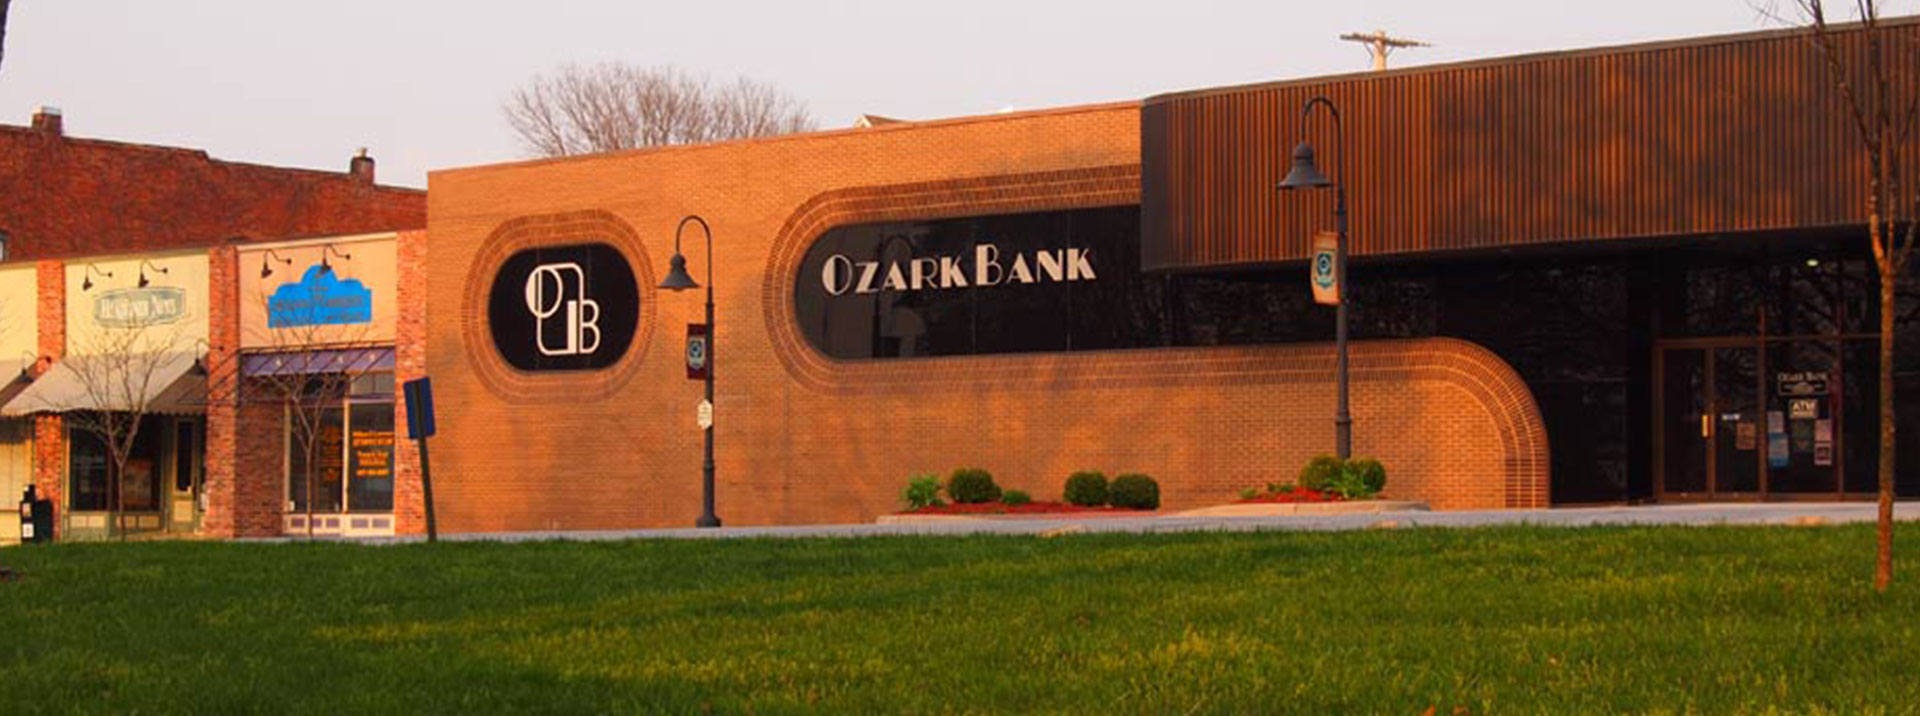 Ozark Bank downtown location.